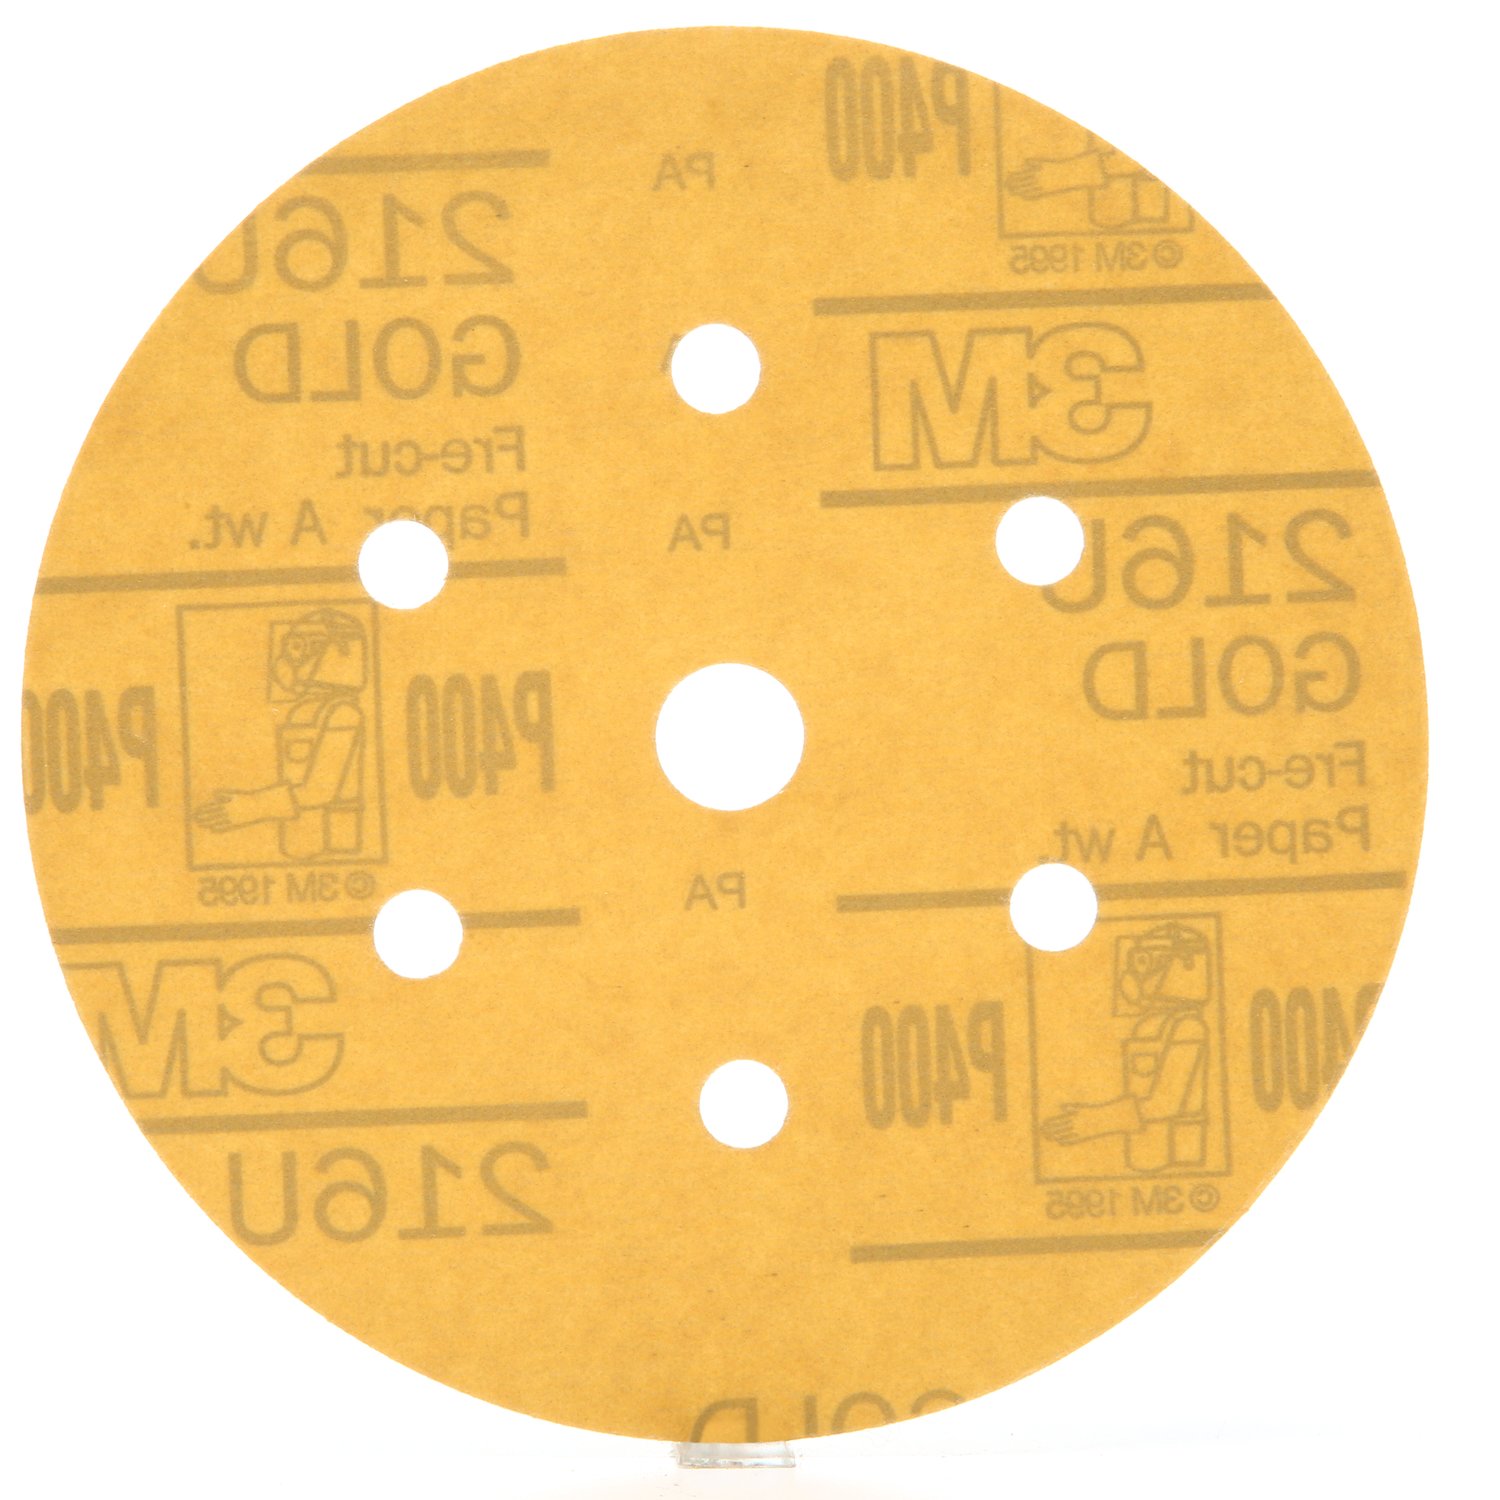 7000119688 - 3M Hookit Gold Disc Dust Free 216U 01073, 6 in, P400, 100 Discs/Carton, 4 Cartons/Case